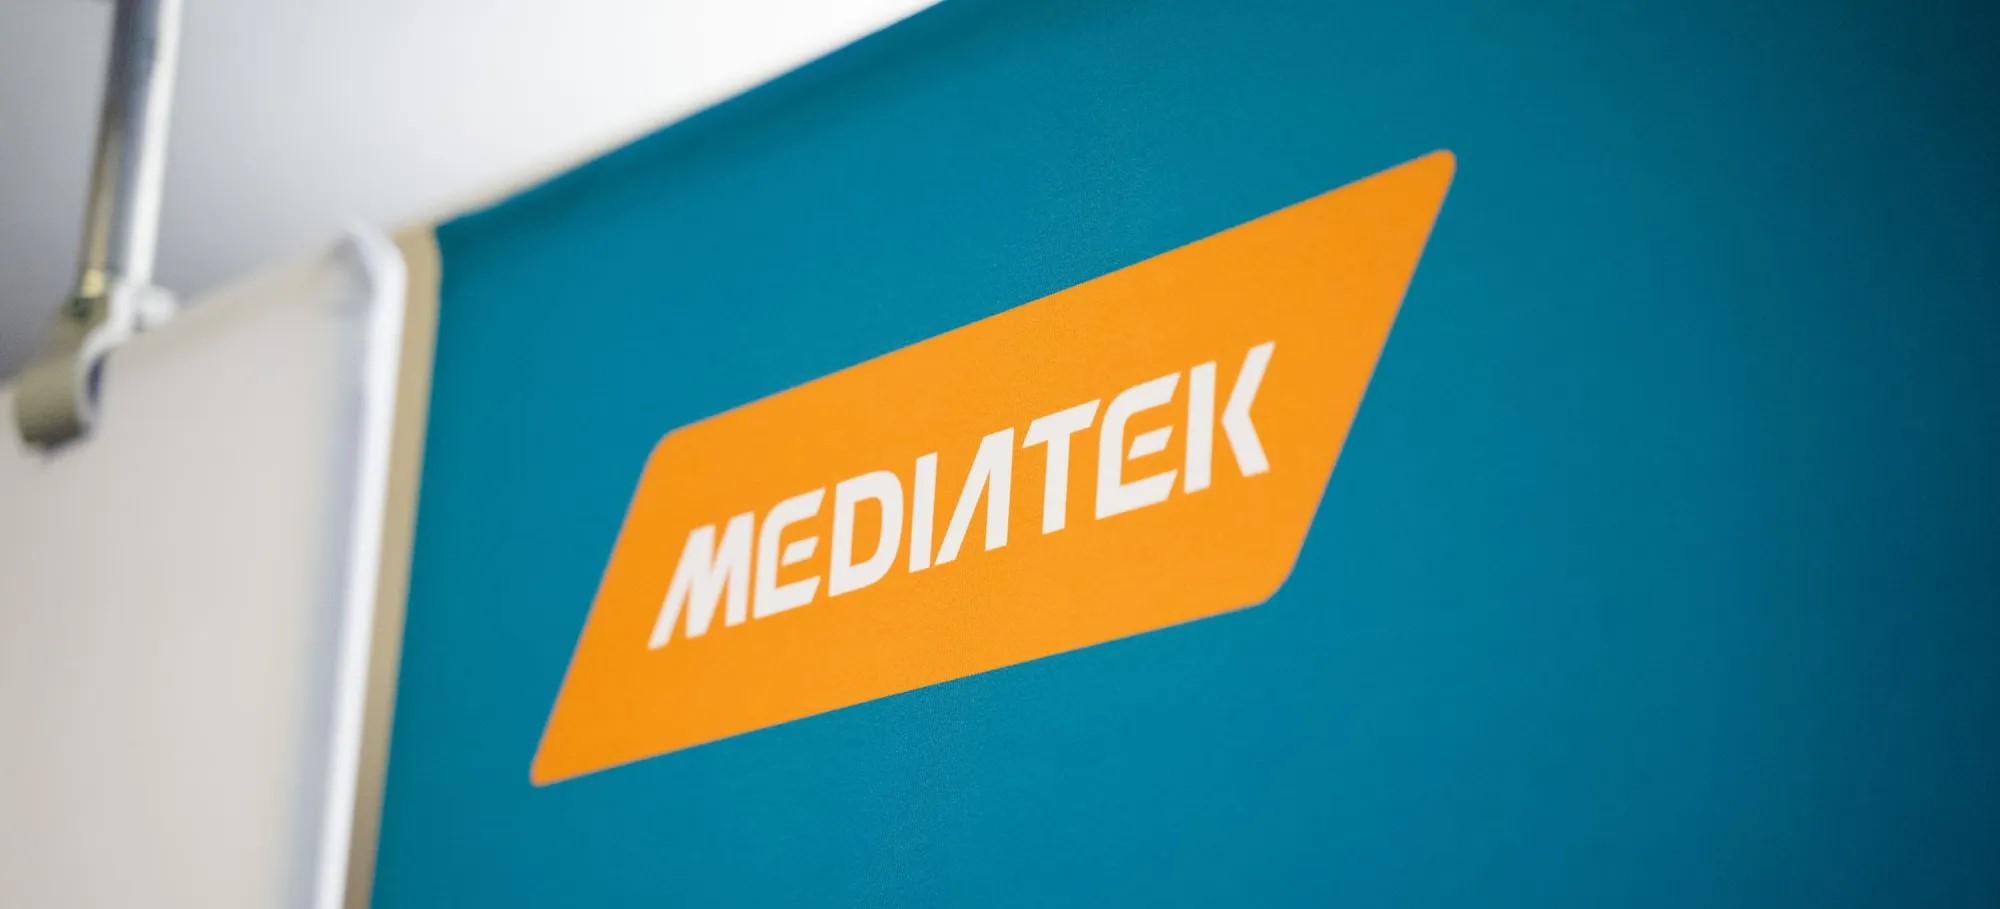 mediatek-logo-2